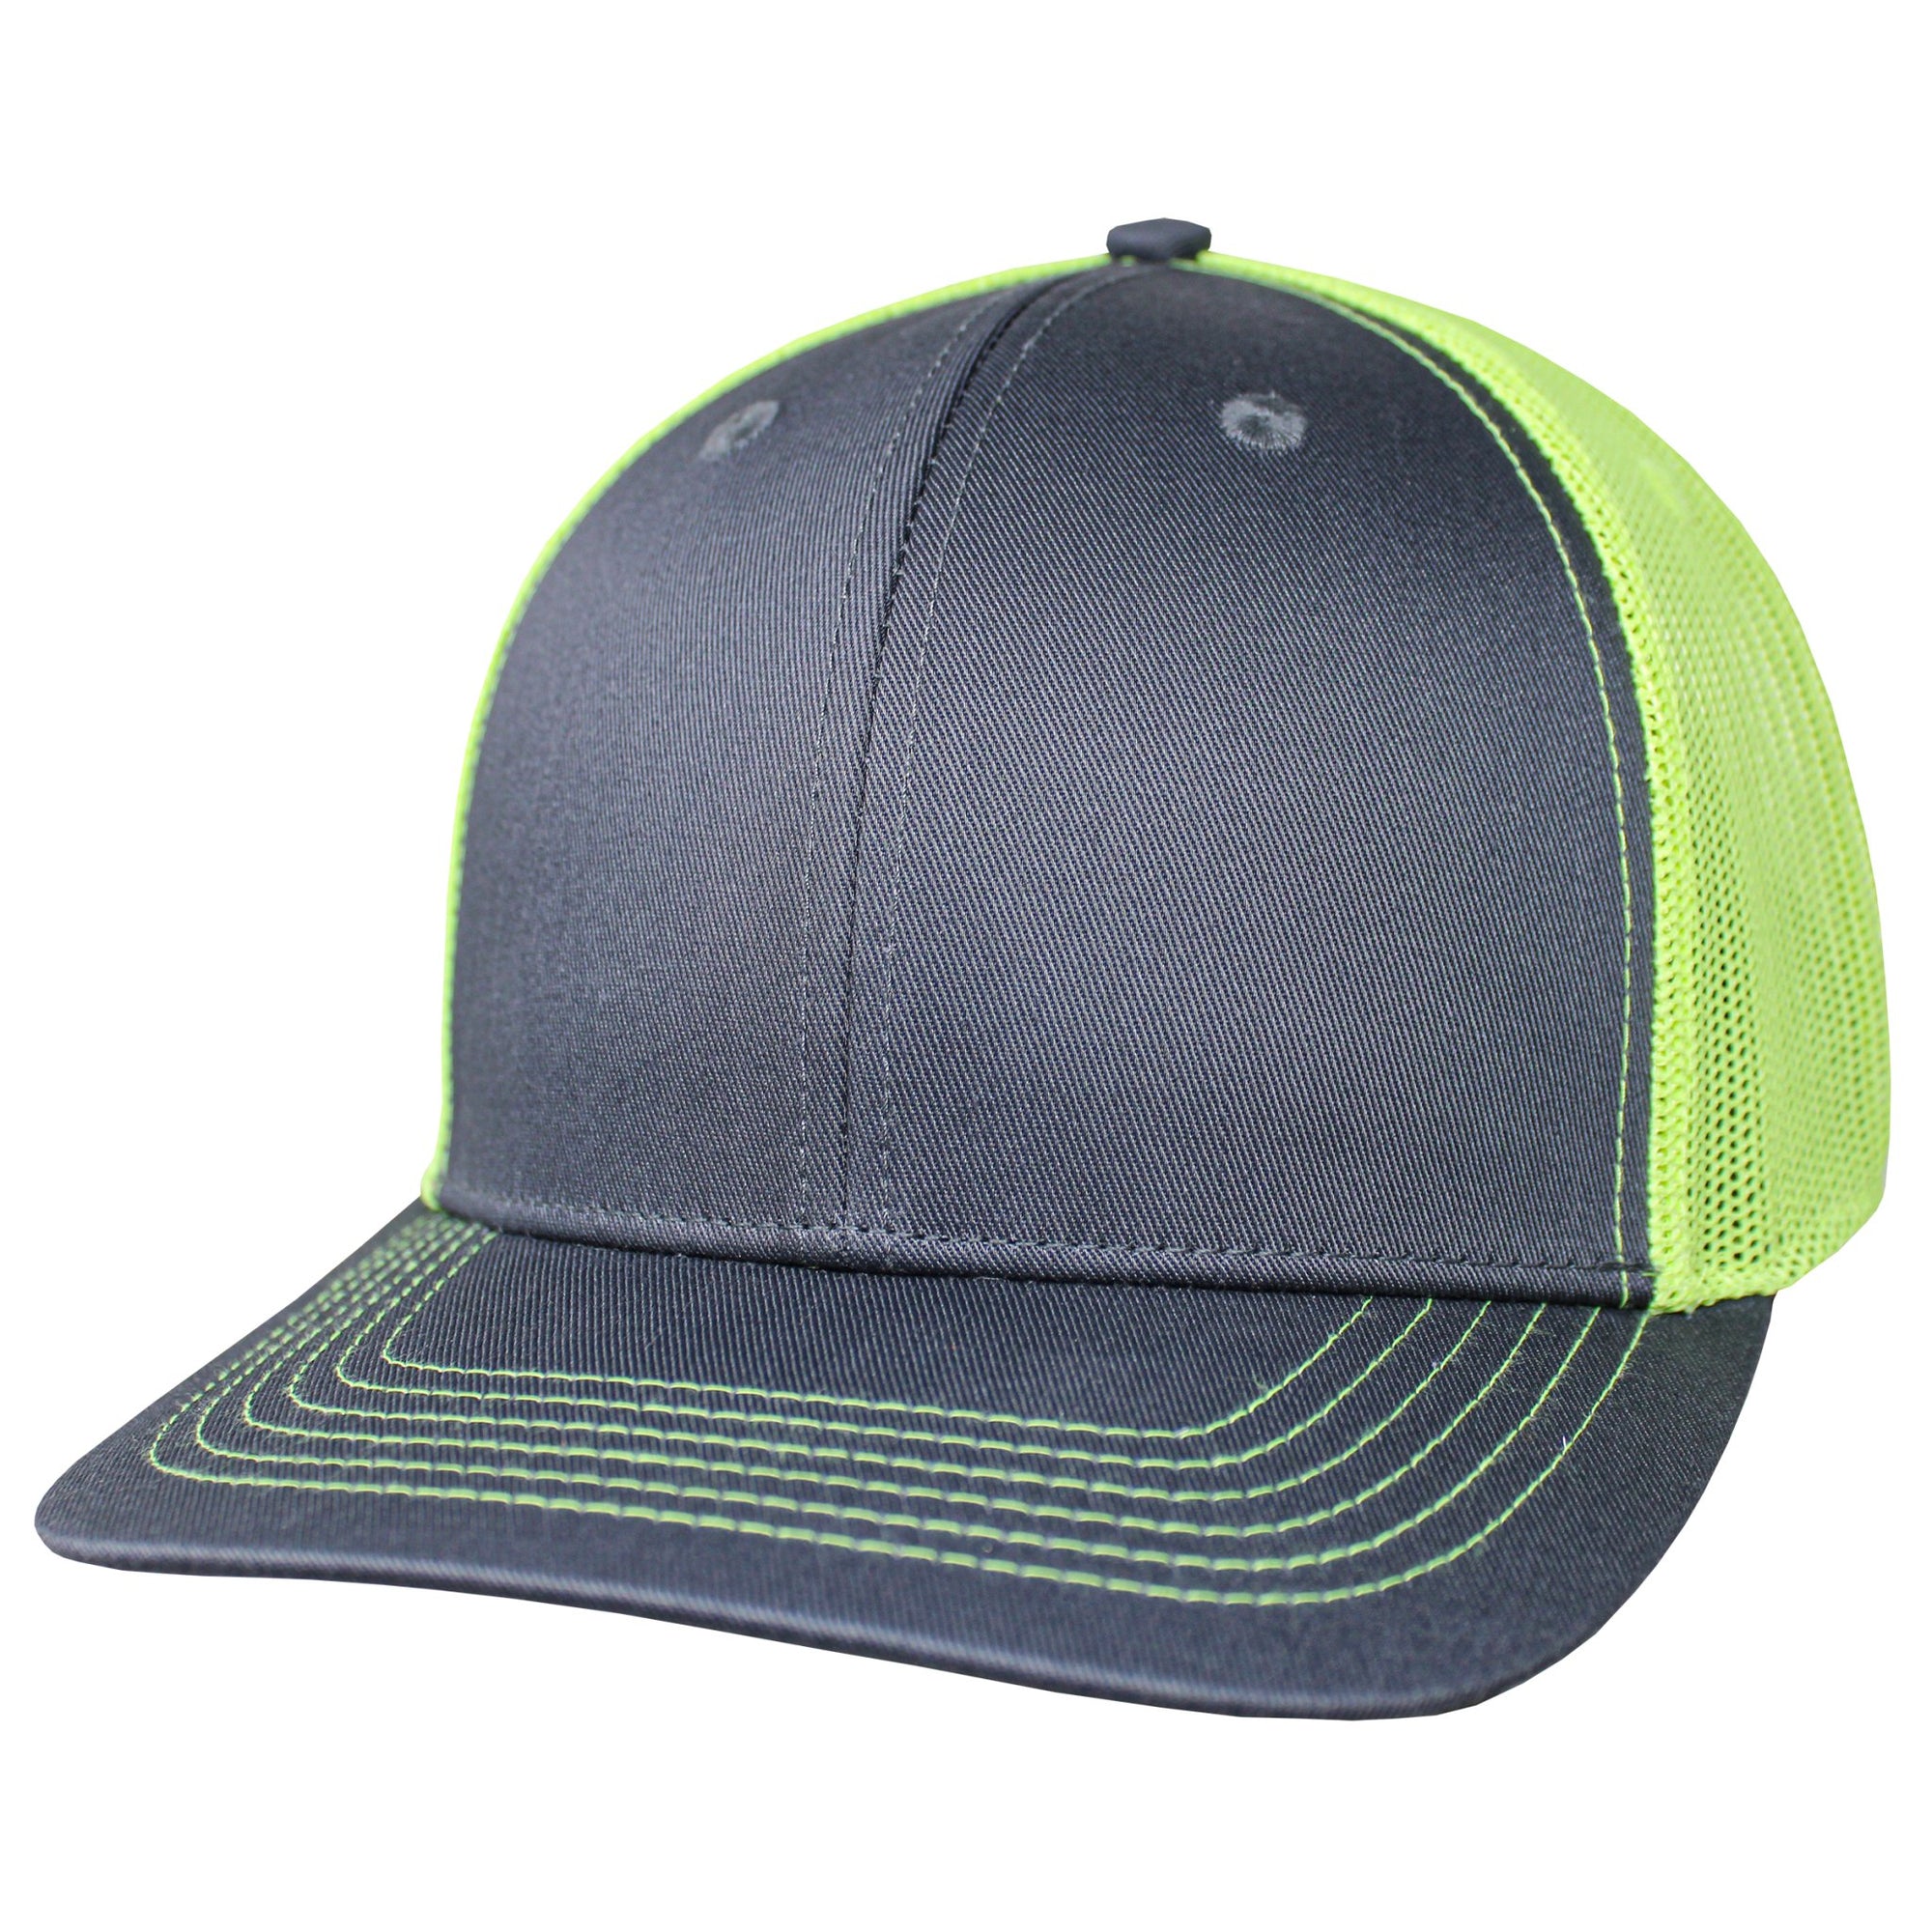 Blank Headwear - BC23 / 6 Panel Performance Trucker Cap - Dark Gray / Neon Green - Black Cat MFG - Hat